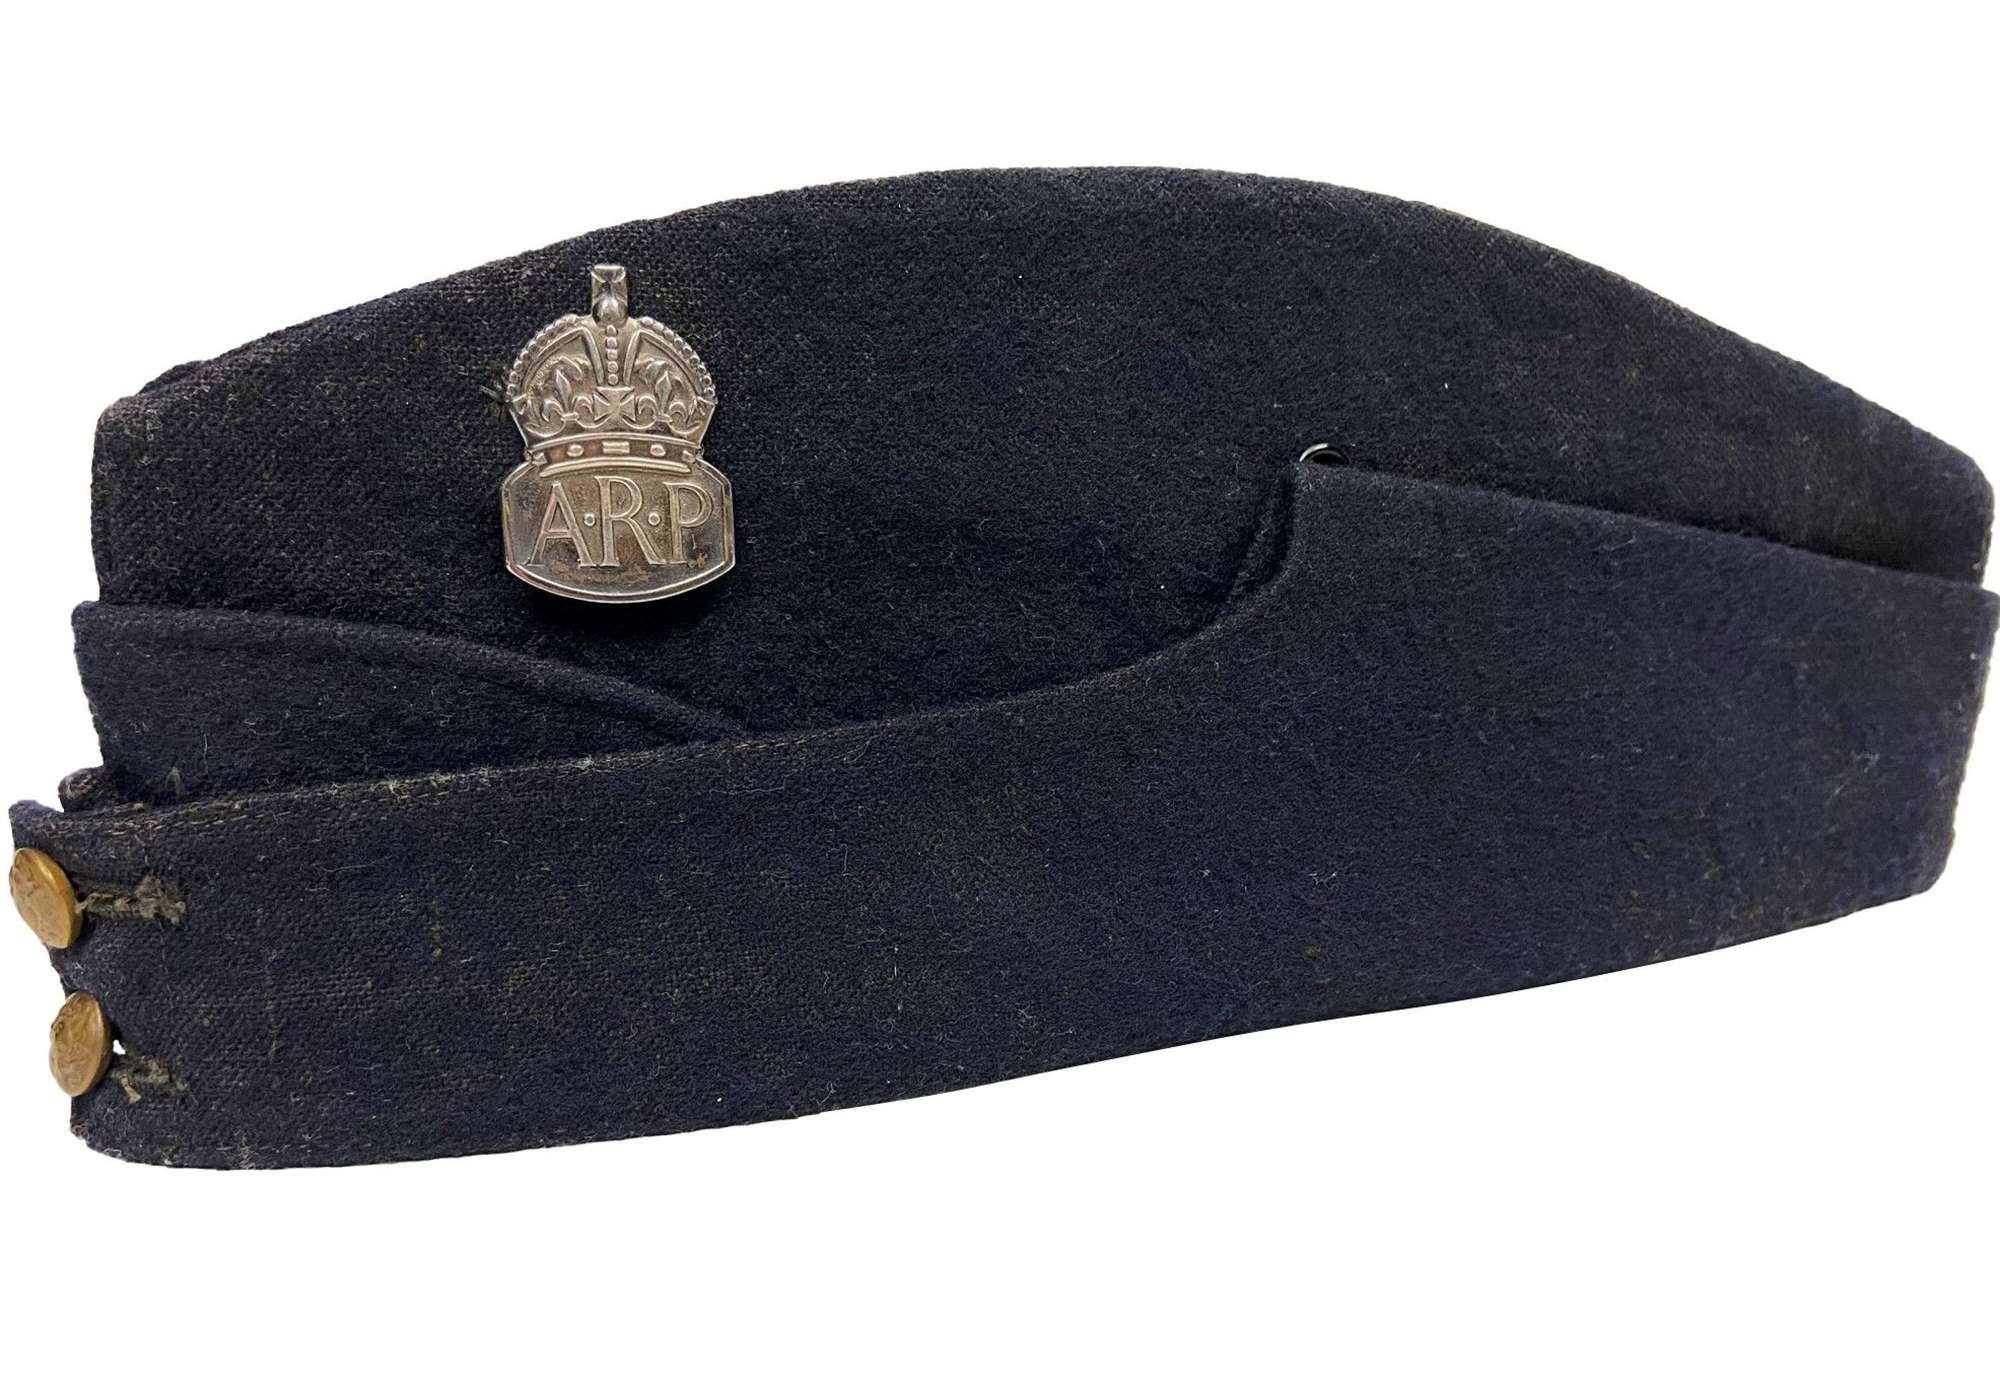 Original WW2 ARP Field Service Cap with Silver 1939 ARP Badge